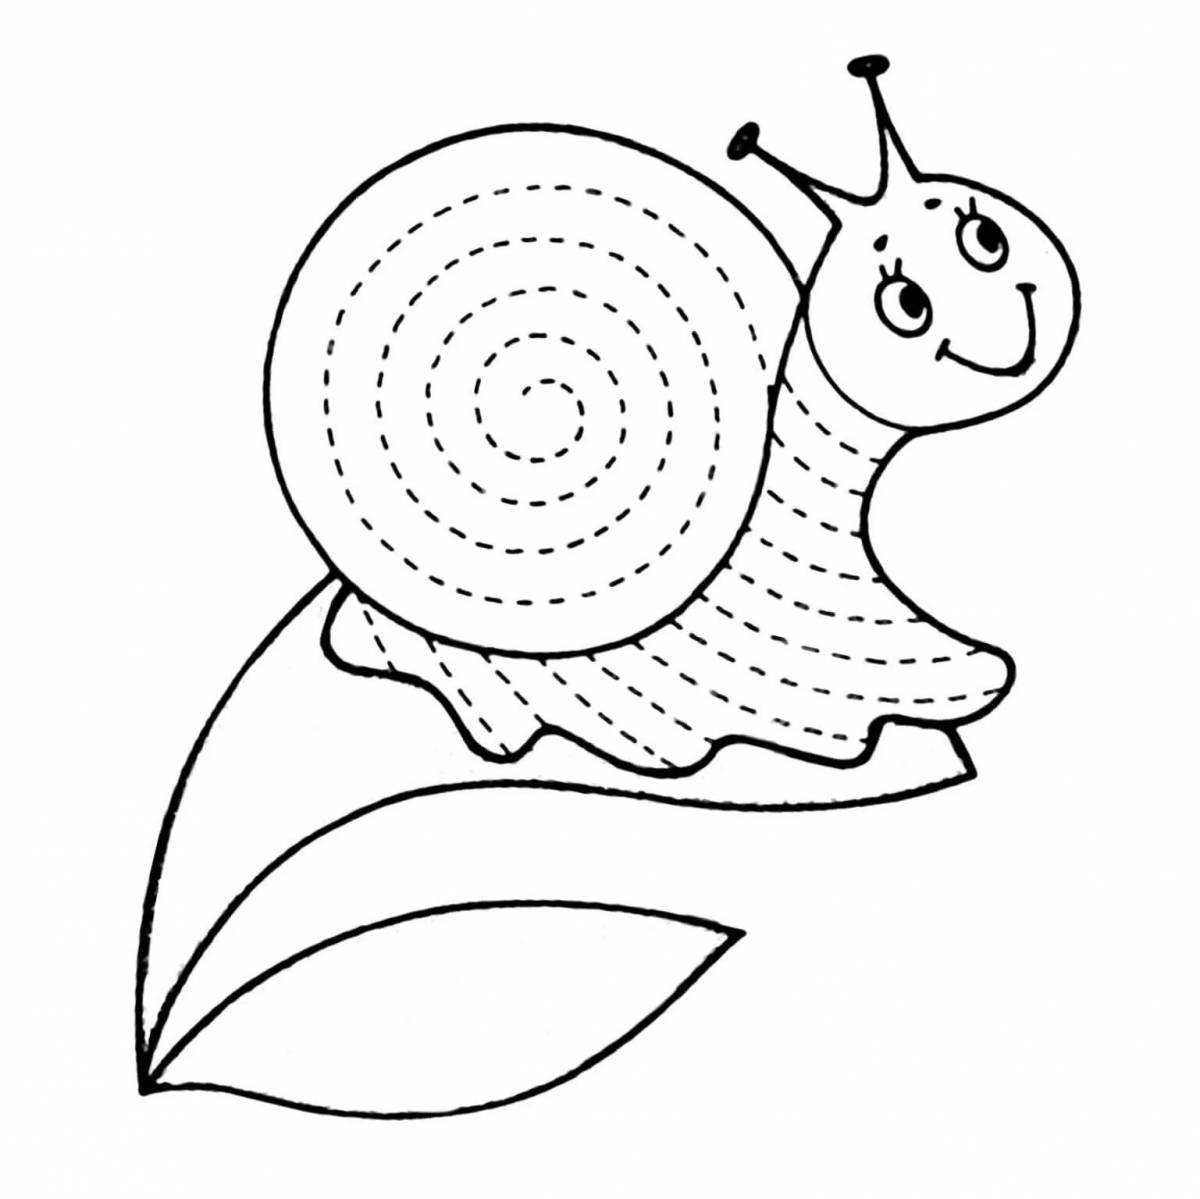 Joyful snail coloring book for kids